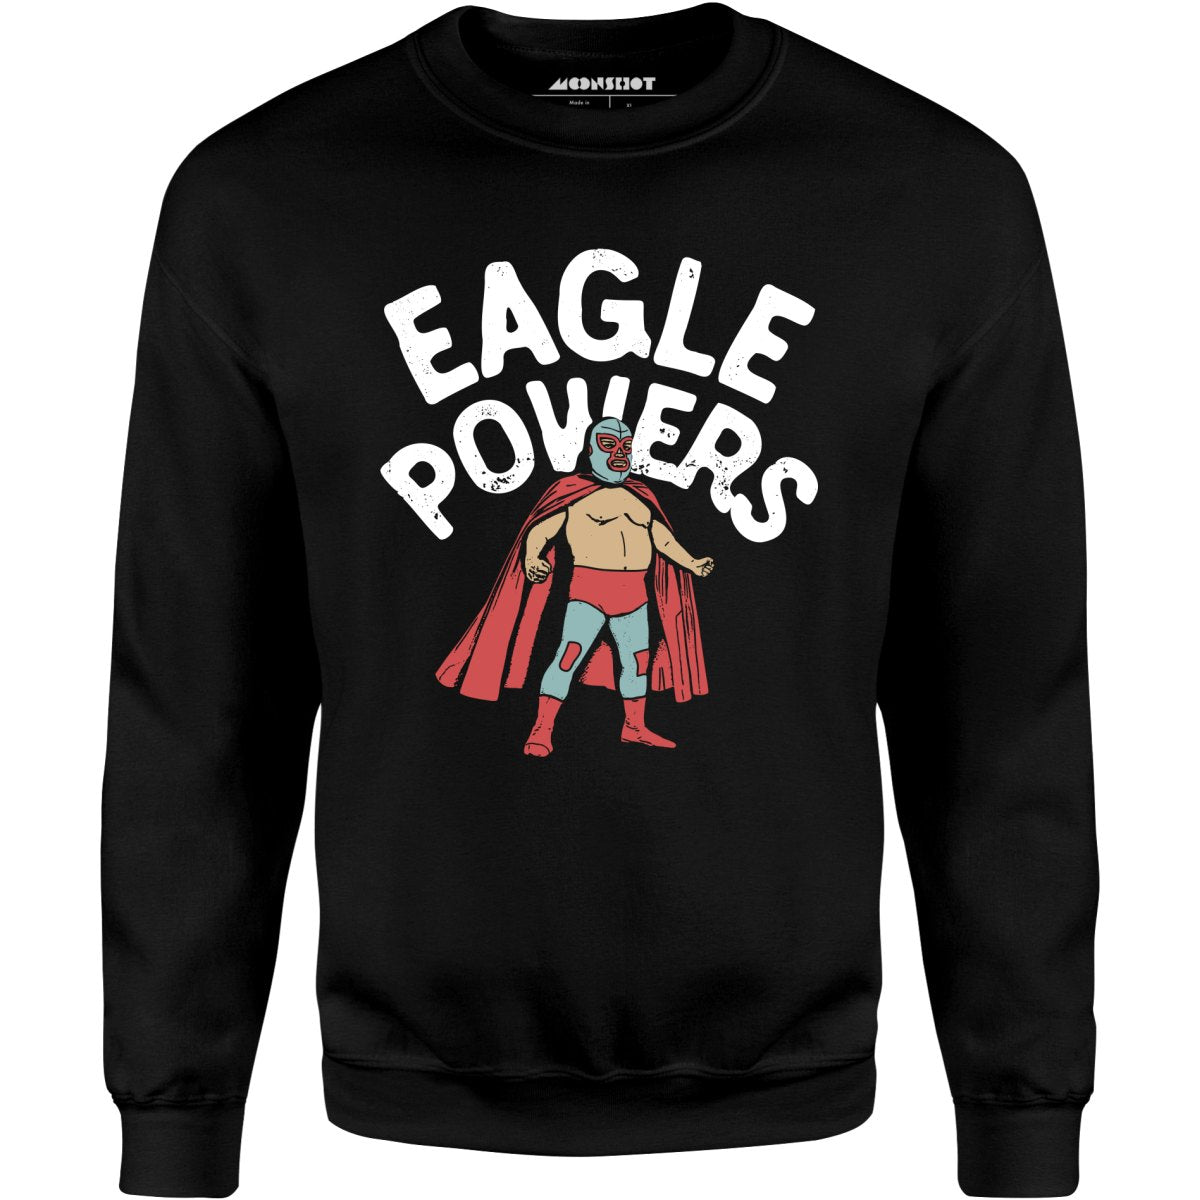 Eagle Powers - Unisex Sweatshirt